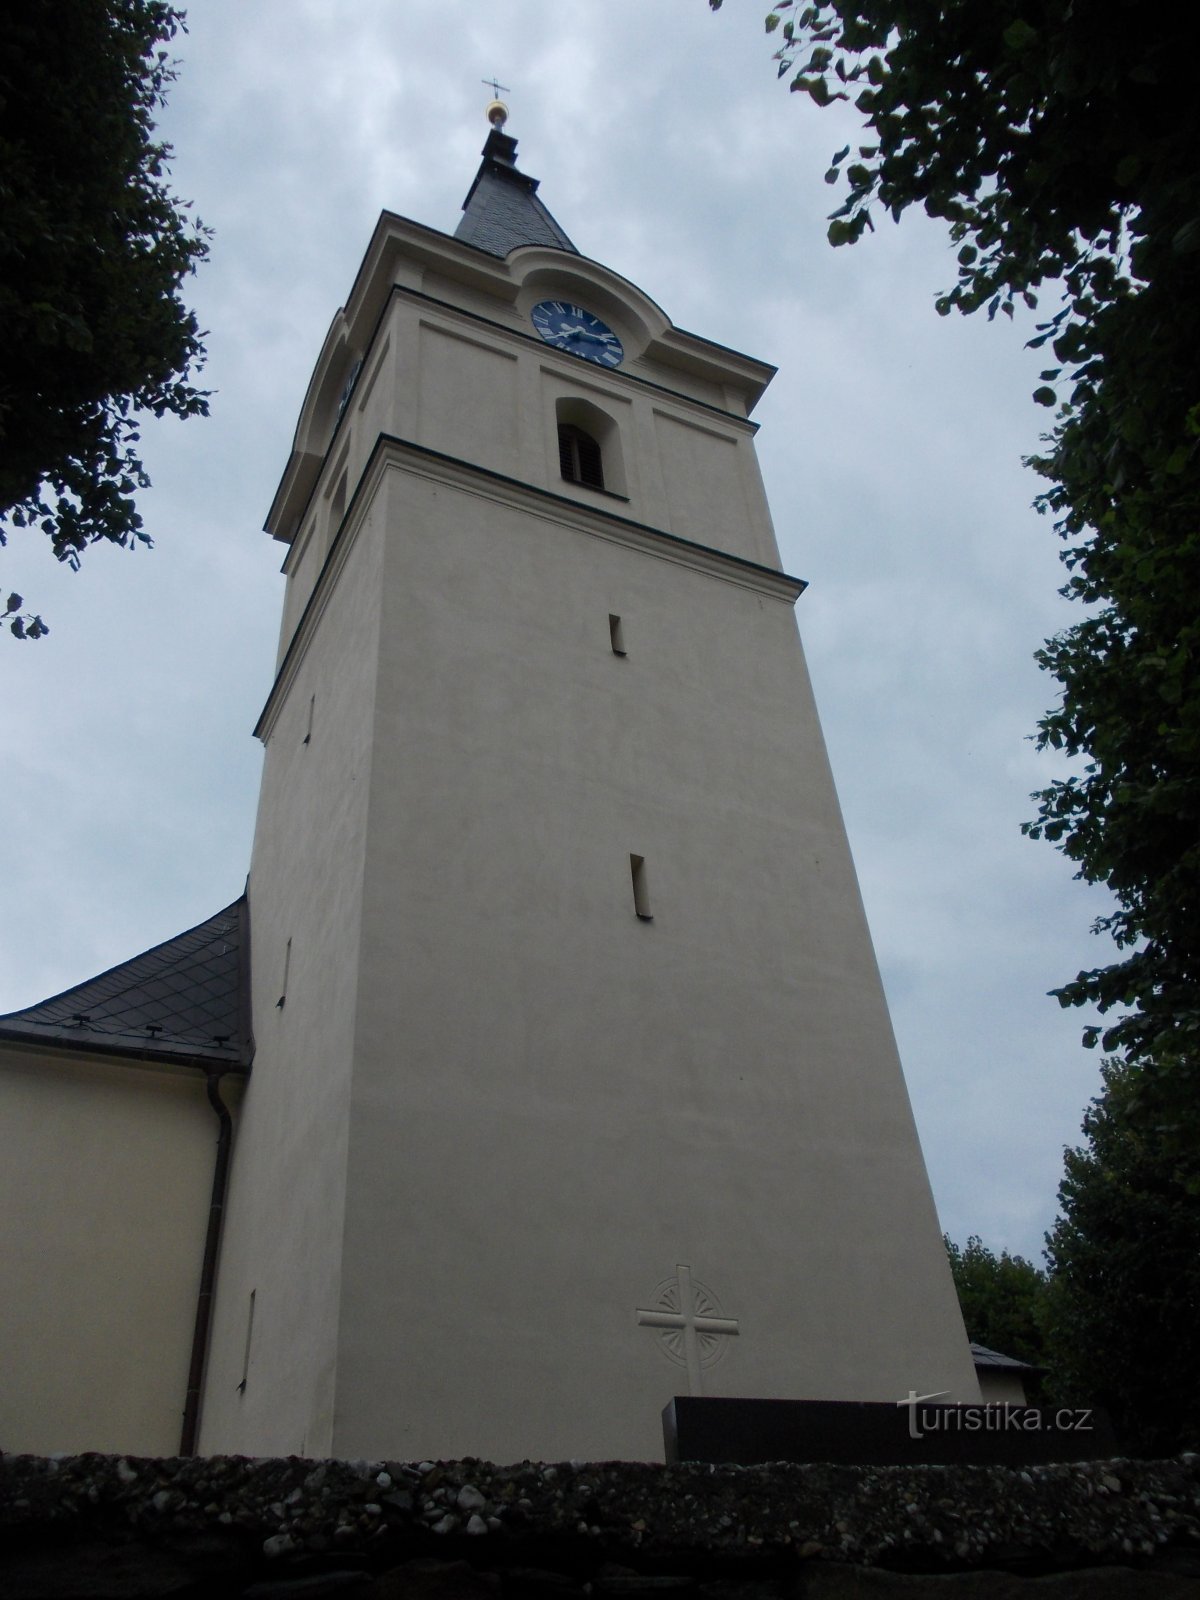 torre da igreja